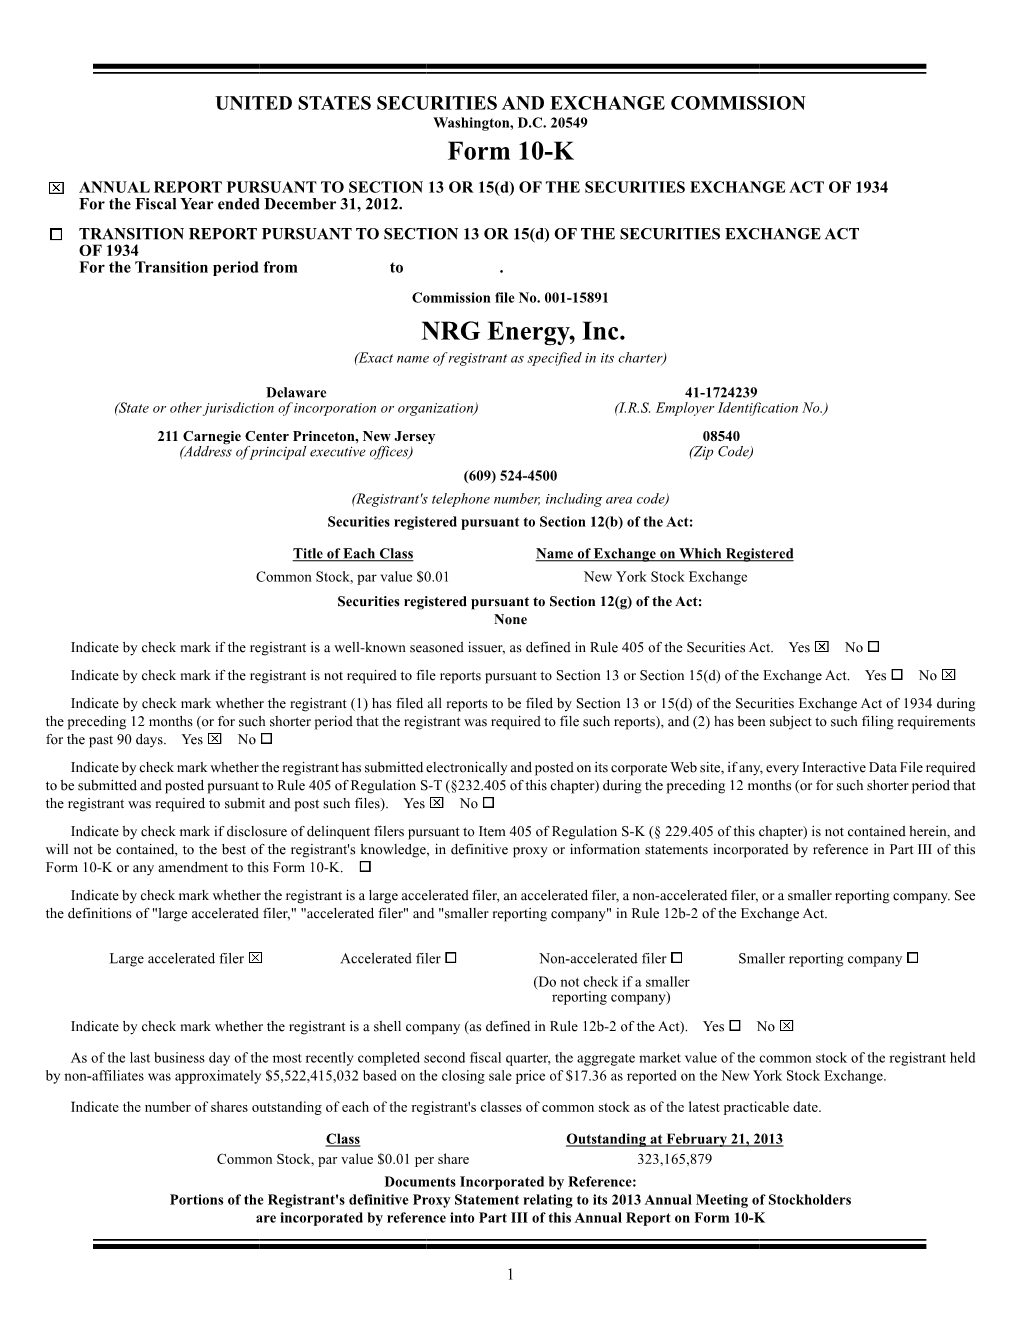 Form 10-K NRG Energy, Inc